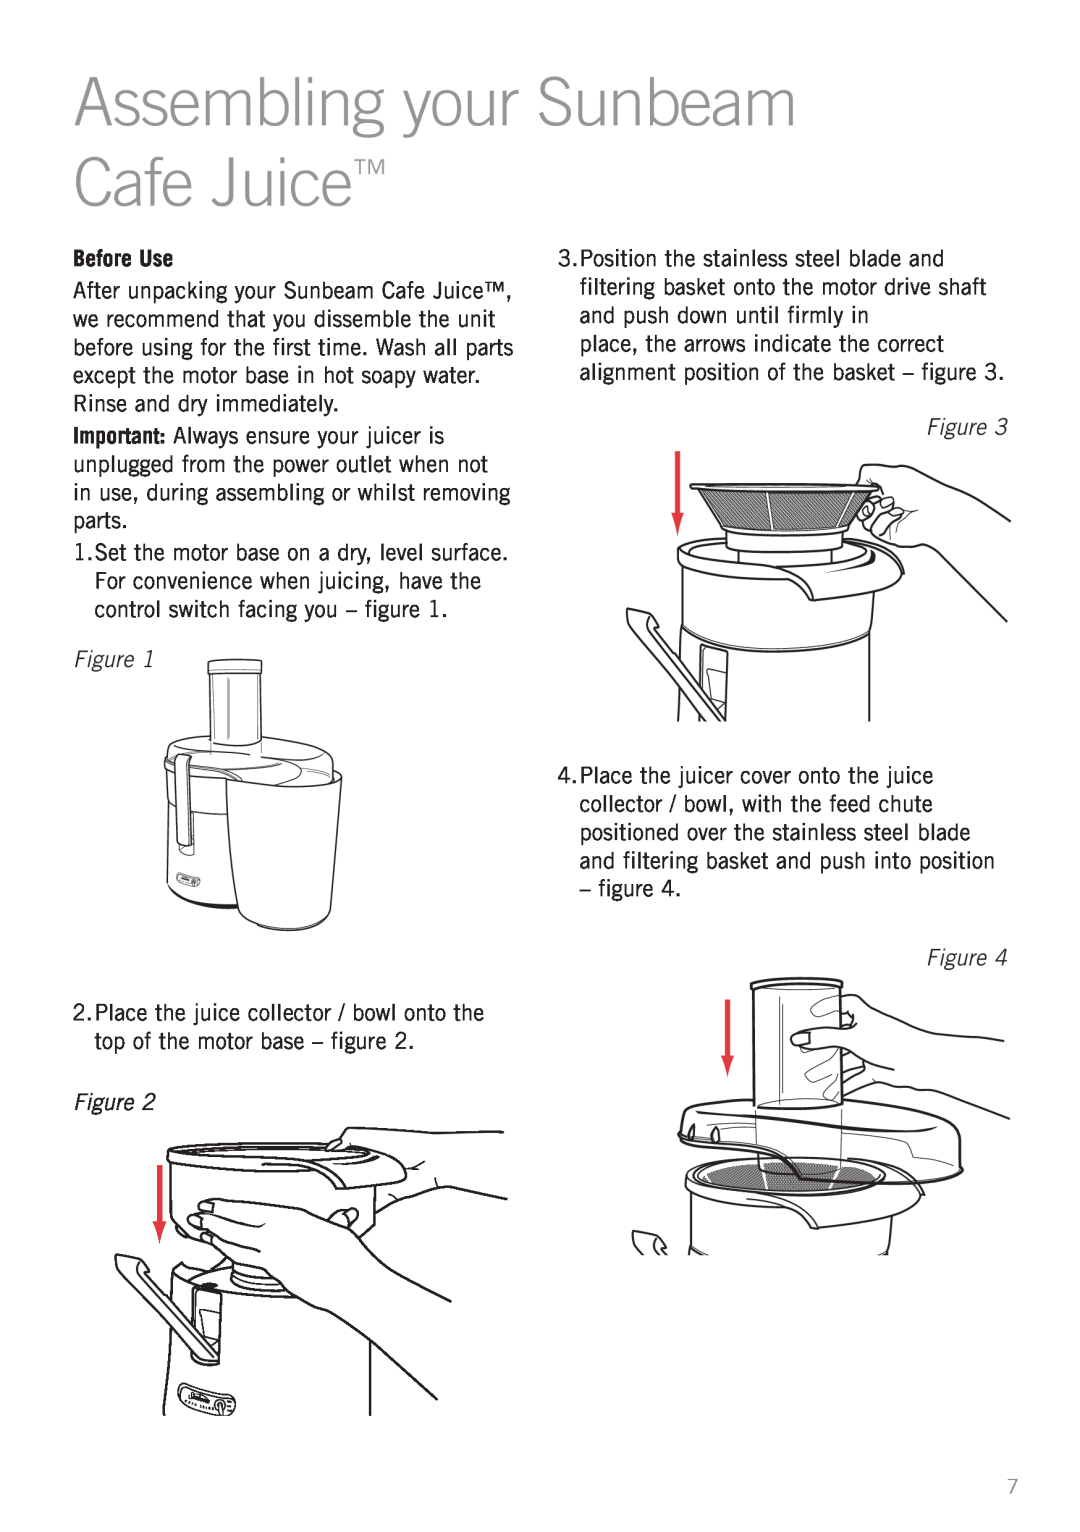 Sunbeam JE7600 manual Assembling your Sunbeam Cafe Juice, Before Use 